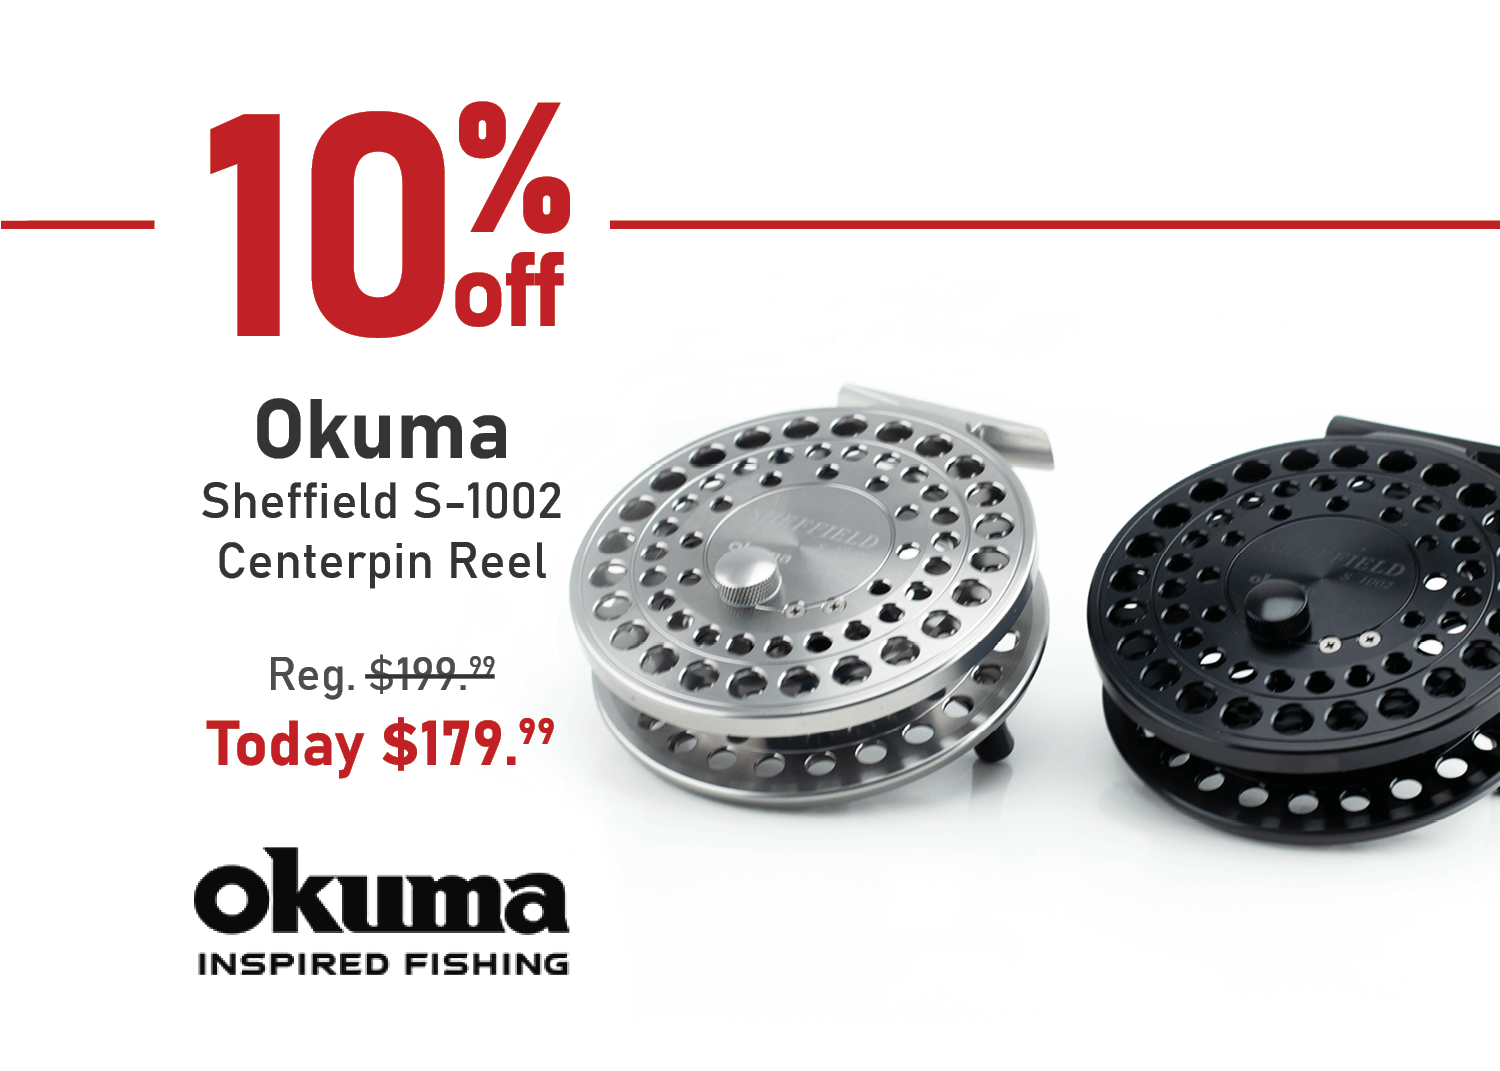 Save 10% on the Okuma Sheffield S-1002 Centerpin Reel